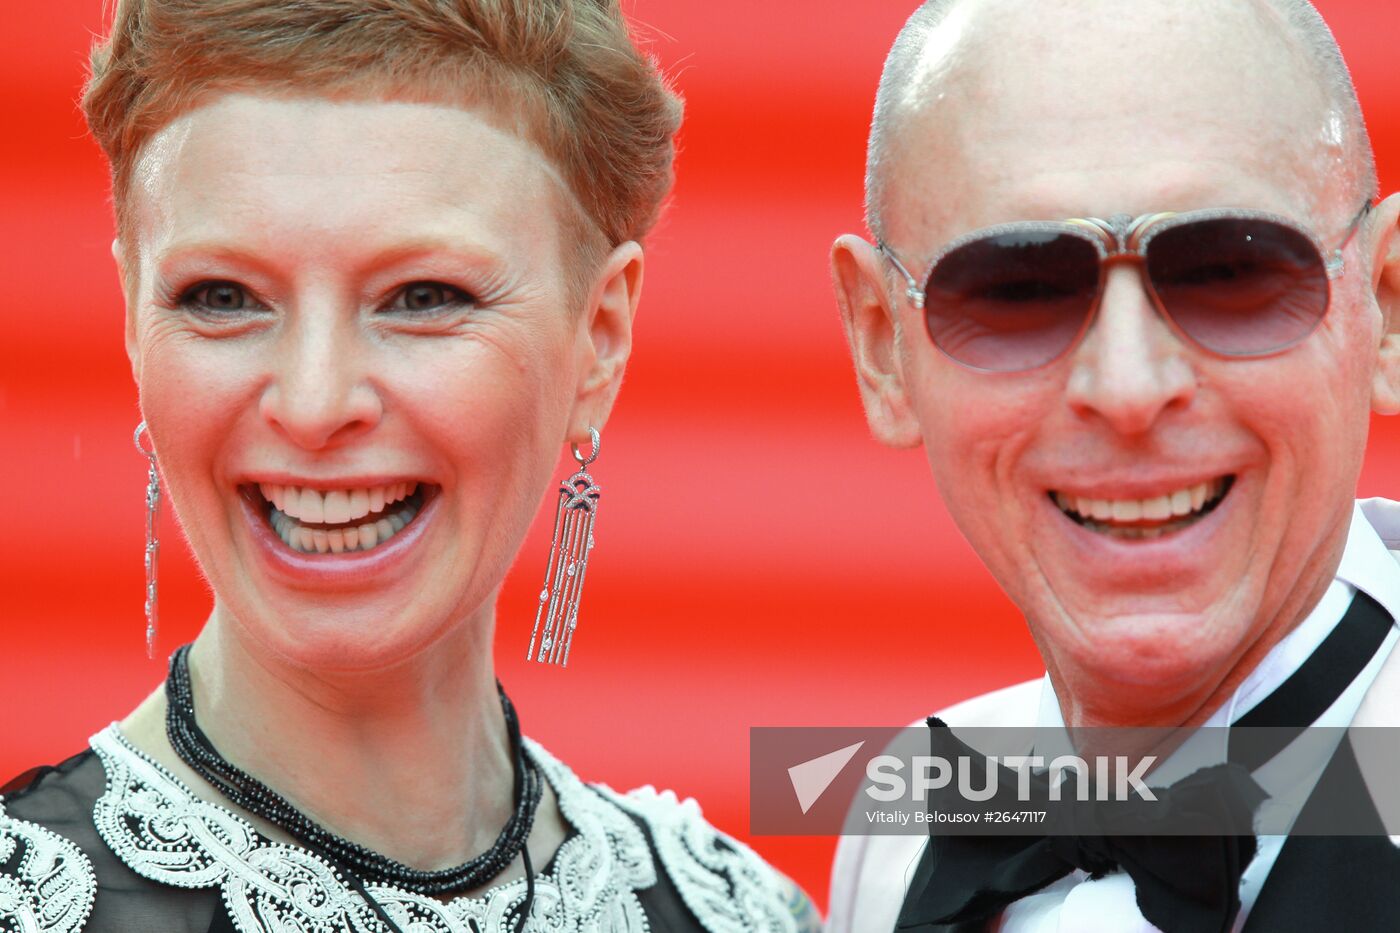 37th Moscow International Film Festival kicks off